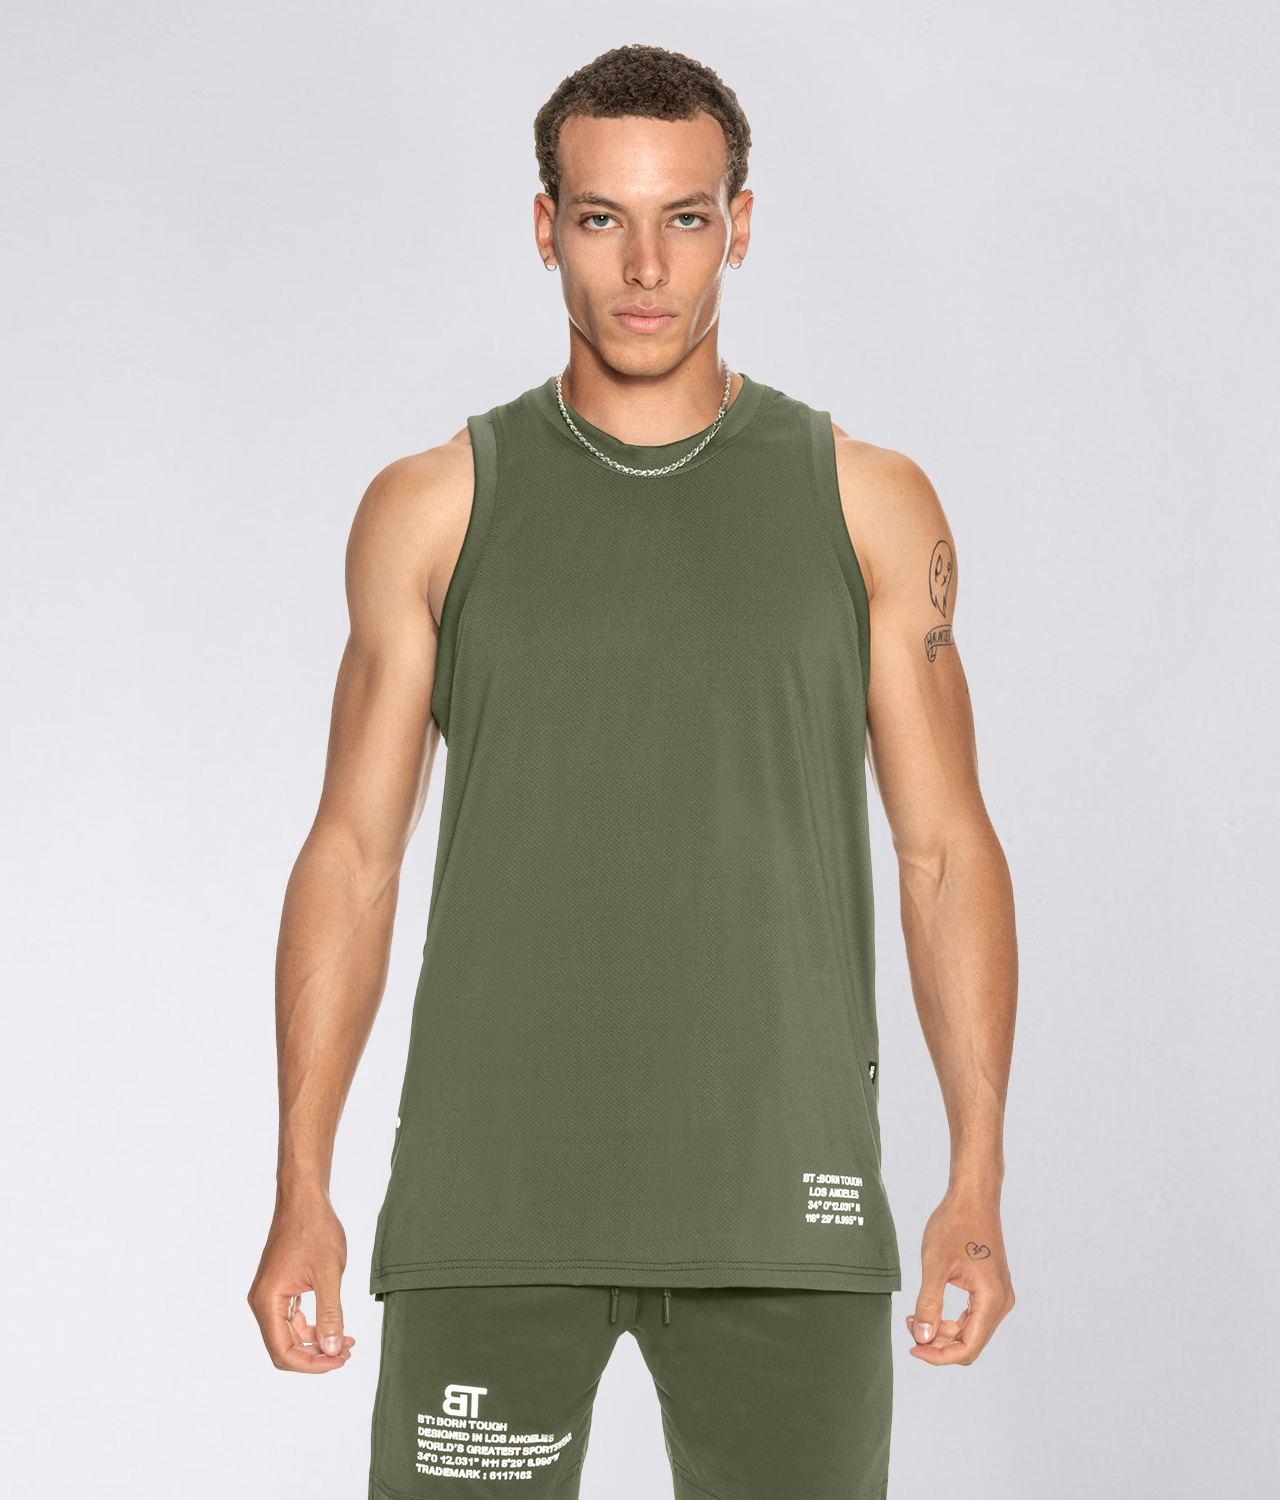 $0 - $25 Green Tank Tops & Sleeveless Shirts.